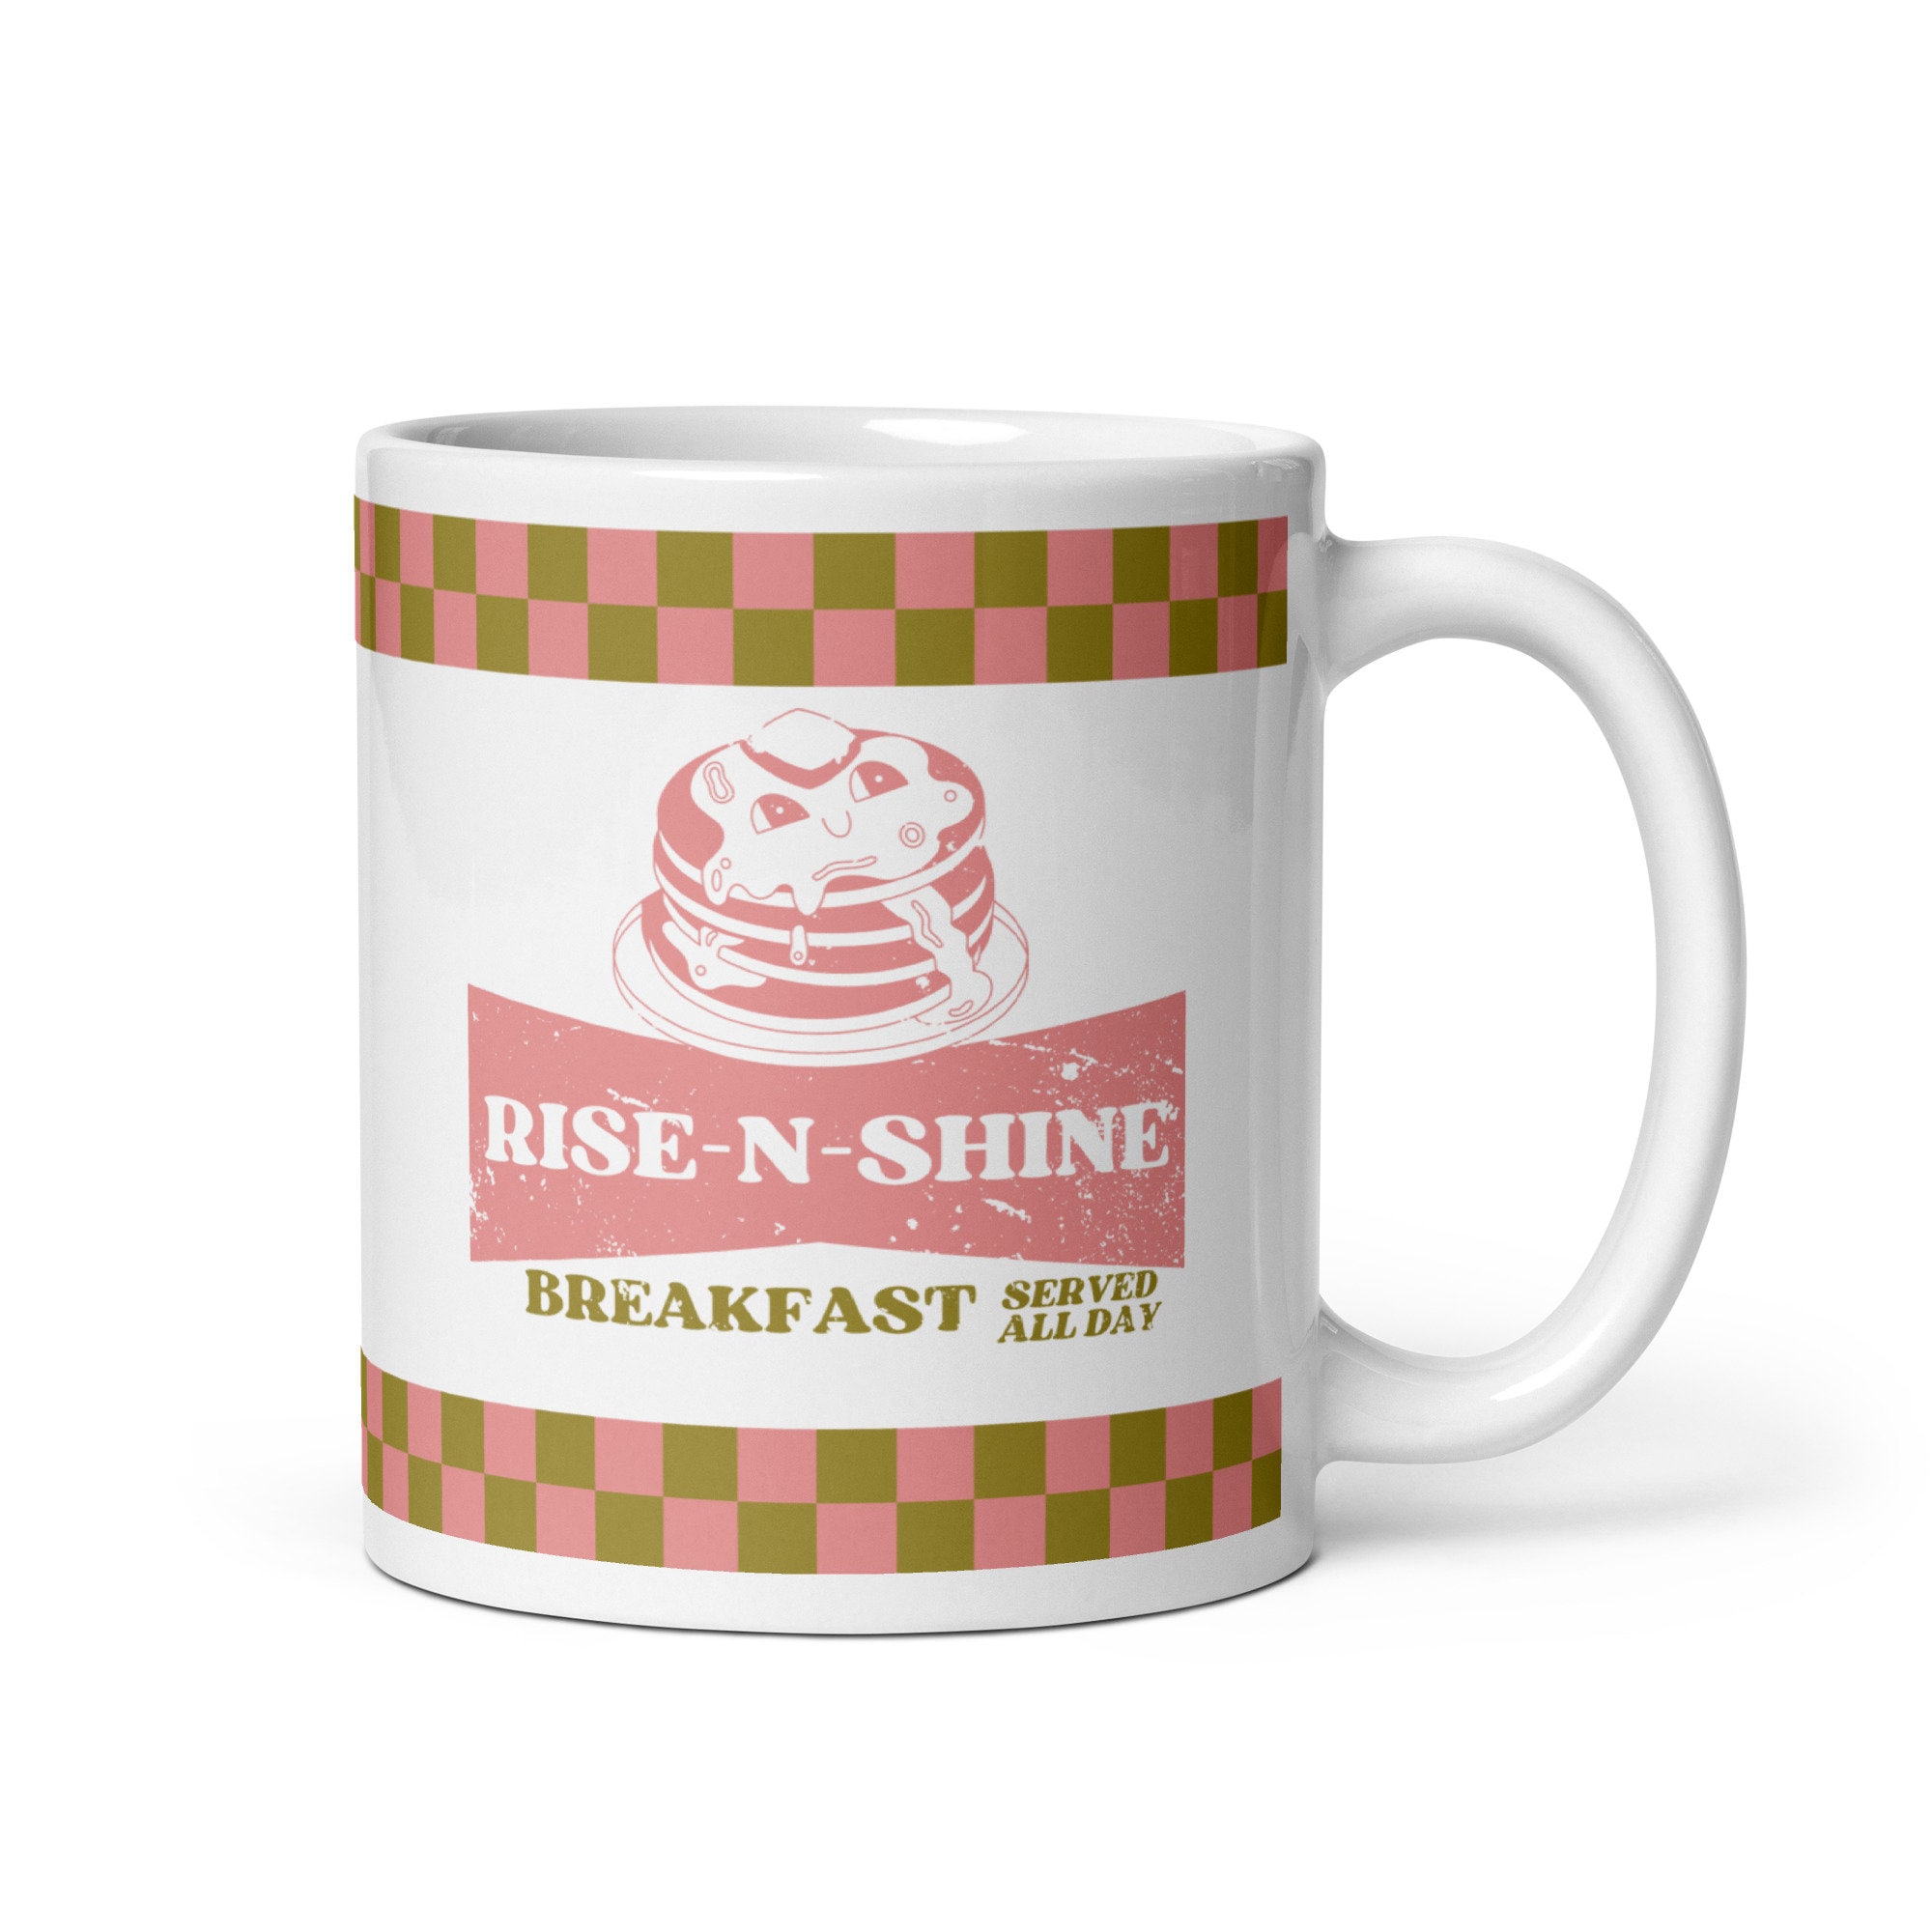 Retro Shipley Cafe and Resto Coffee Mug for Sale by Togo Curt